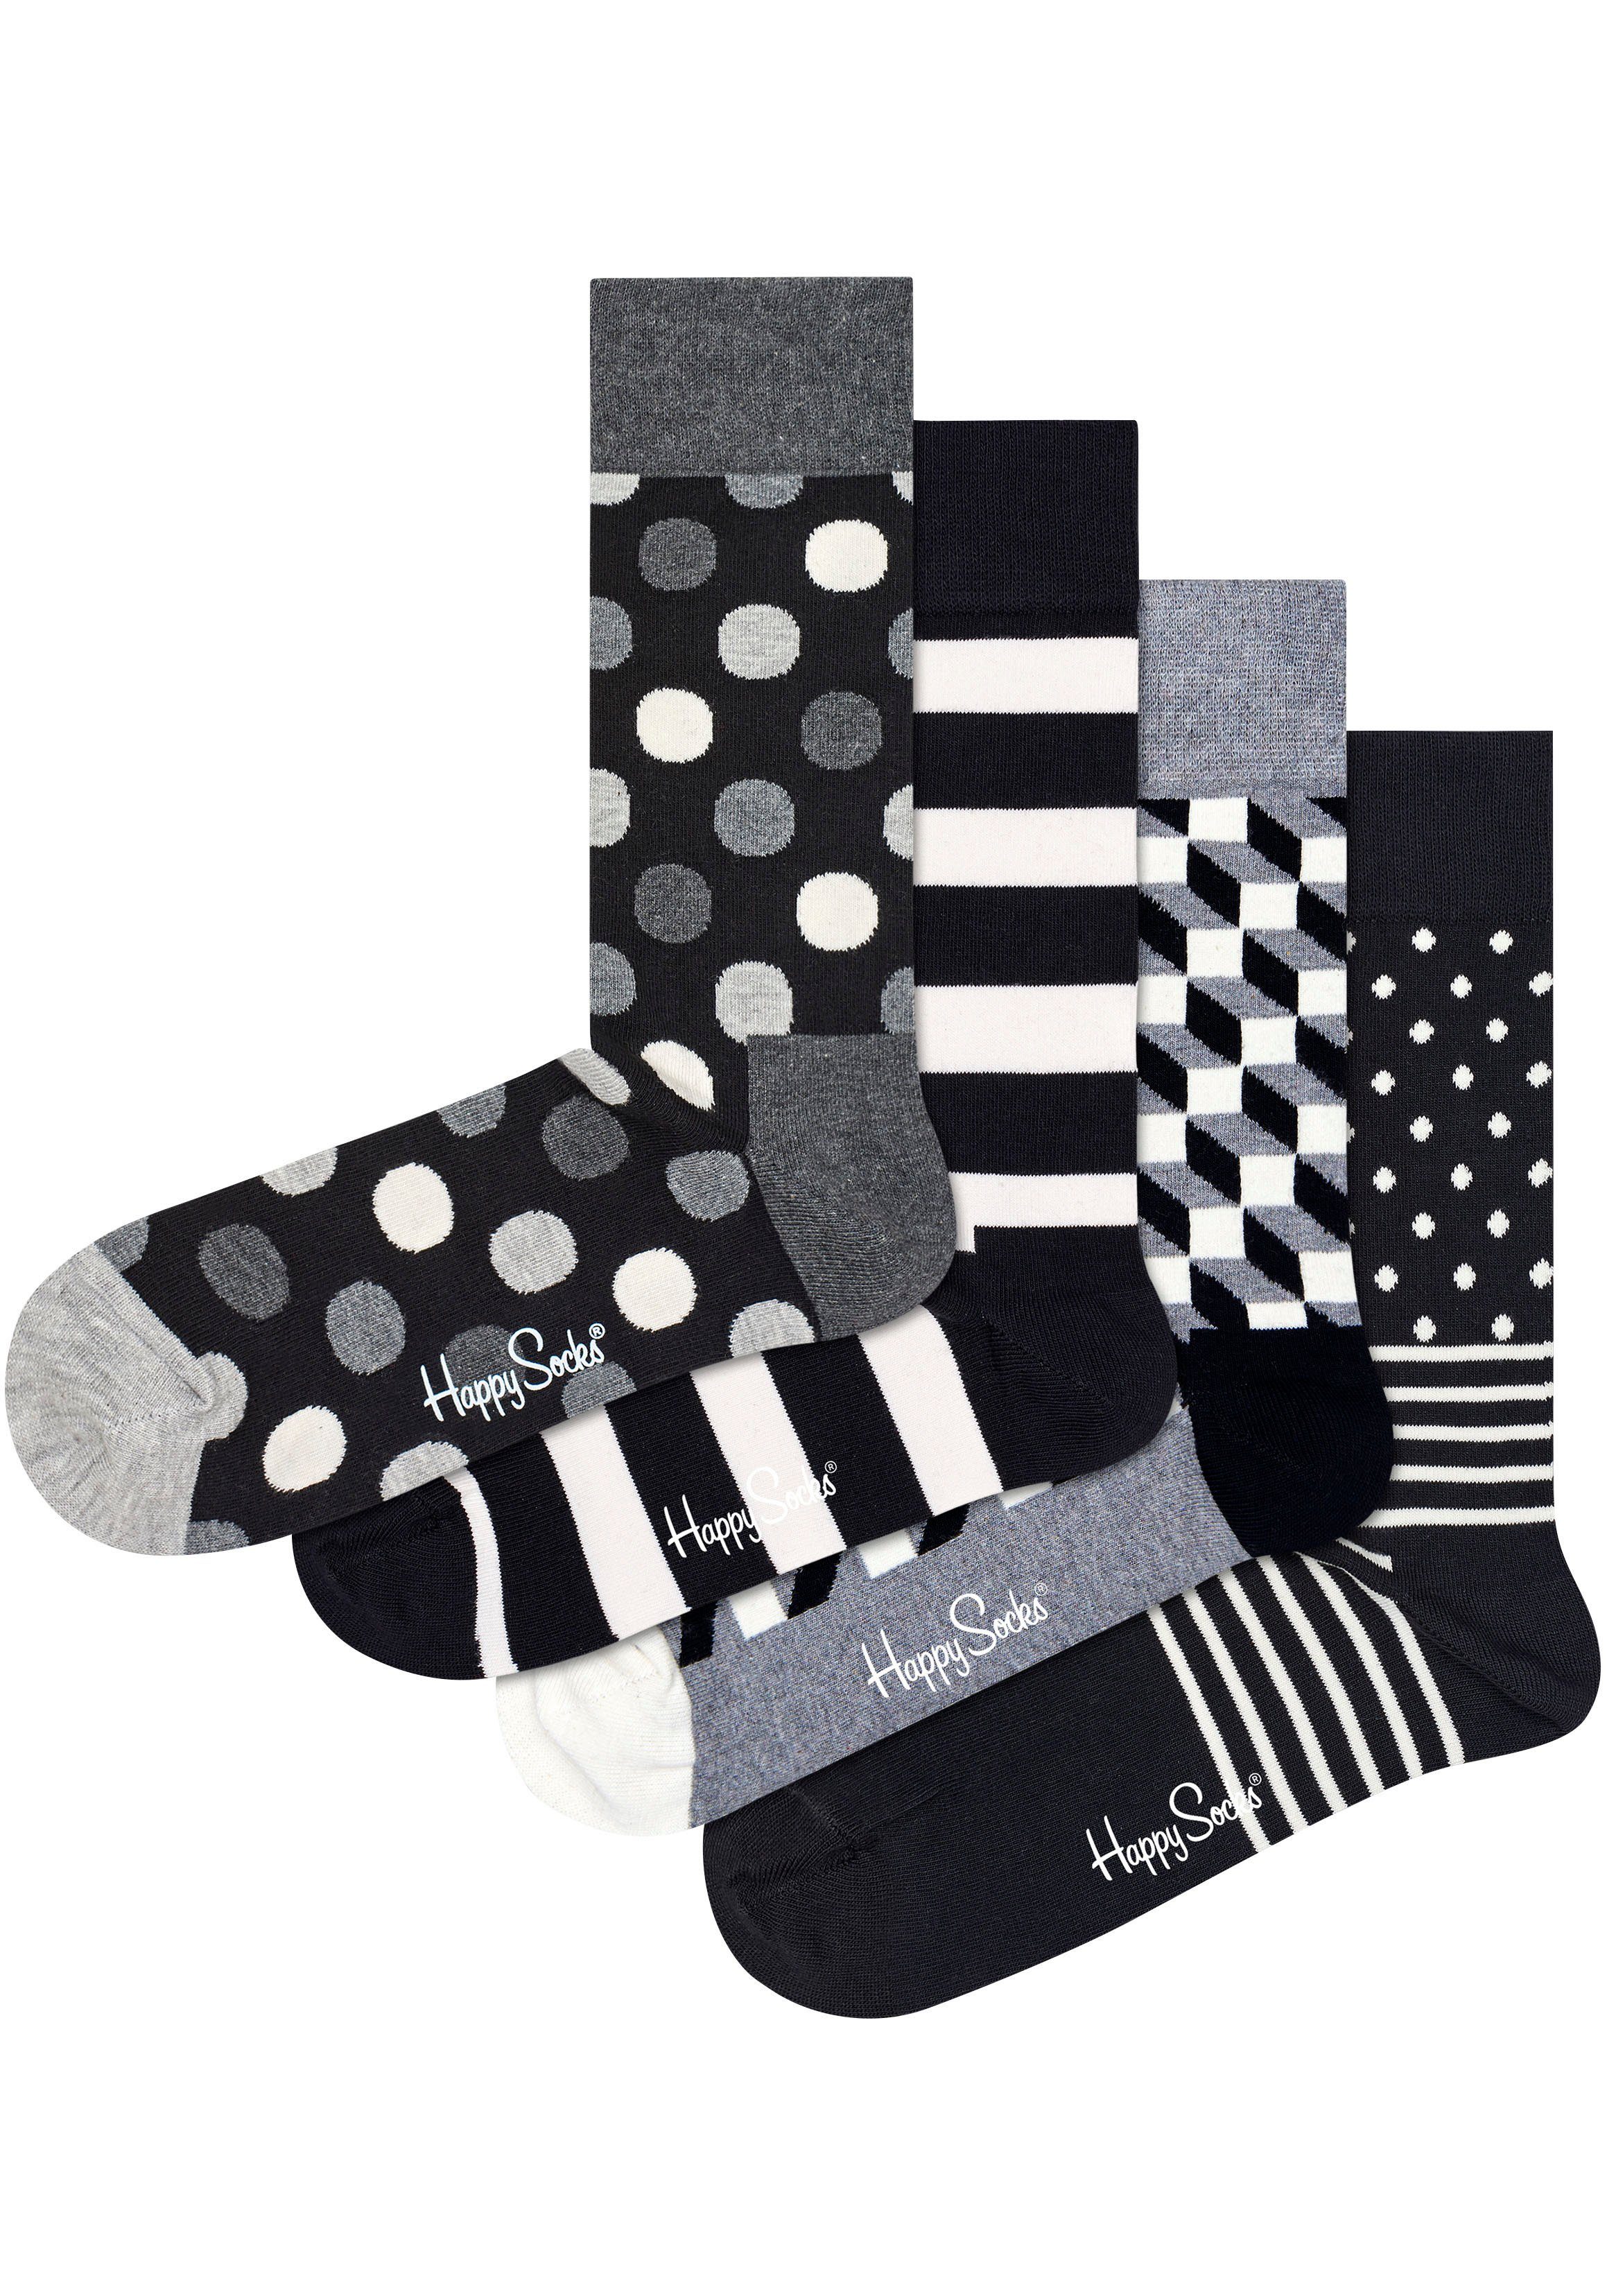 Happy Socks Socken Socks & Gift Black 4-Paar) White grey Classic (Packung, Set dark